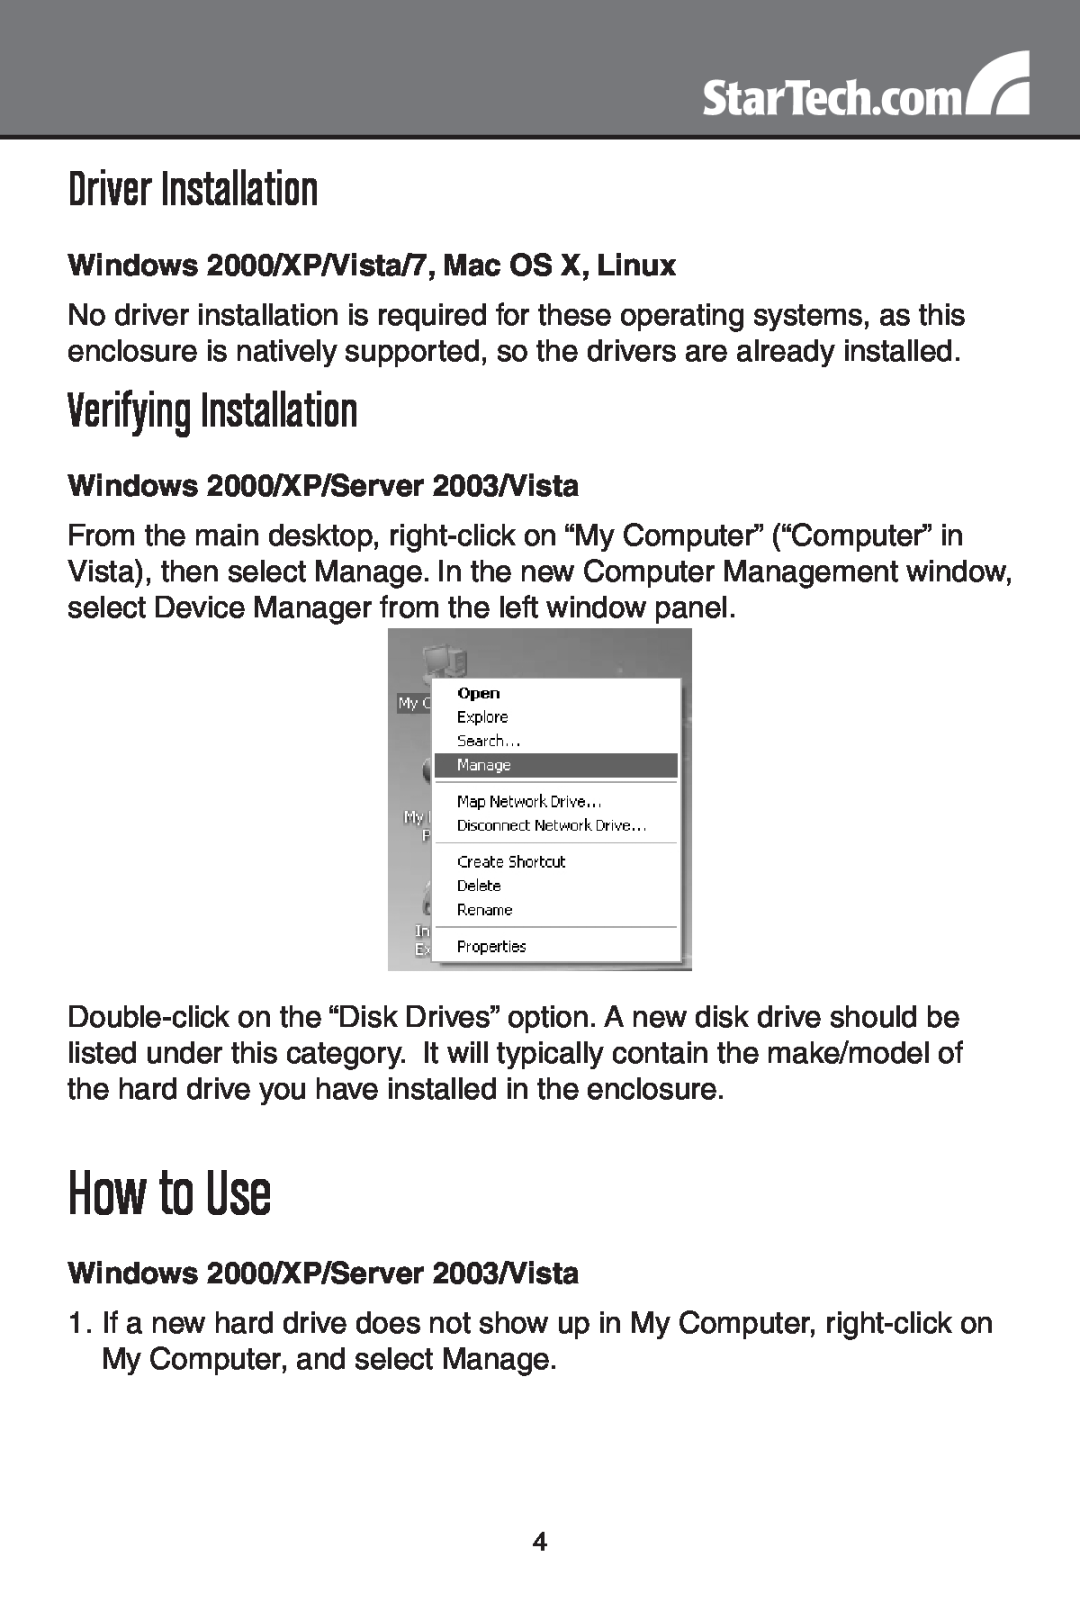 StarTech.com IDE3510U2 How to Use, Driver Installation, Verifying Installation, Windows 2000/XP/Vista/7, Mac OS X, Linux 